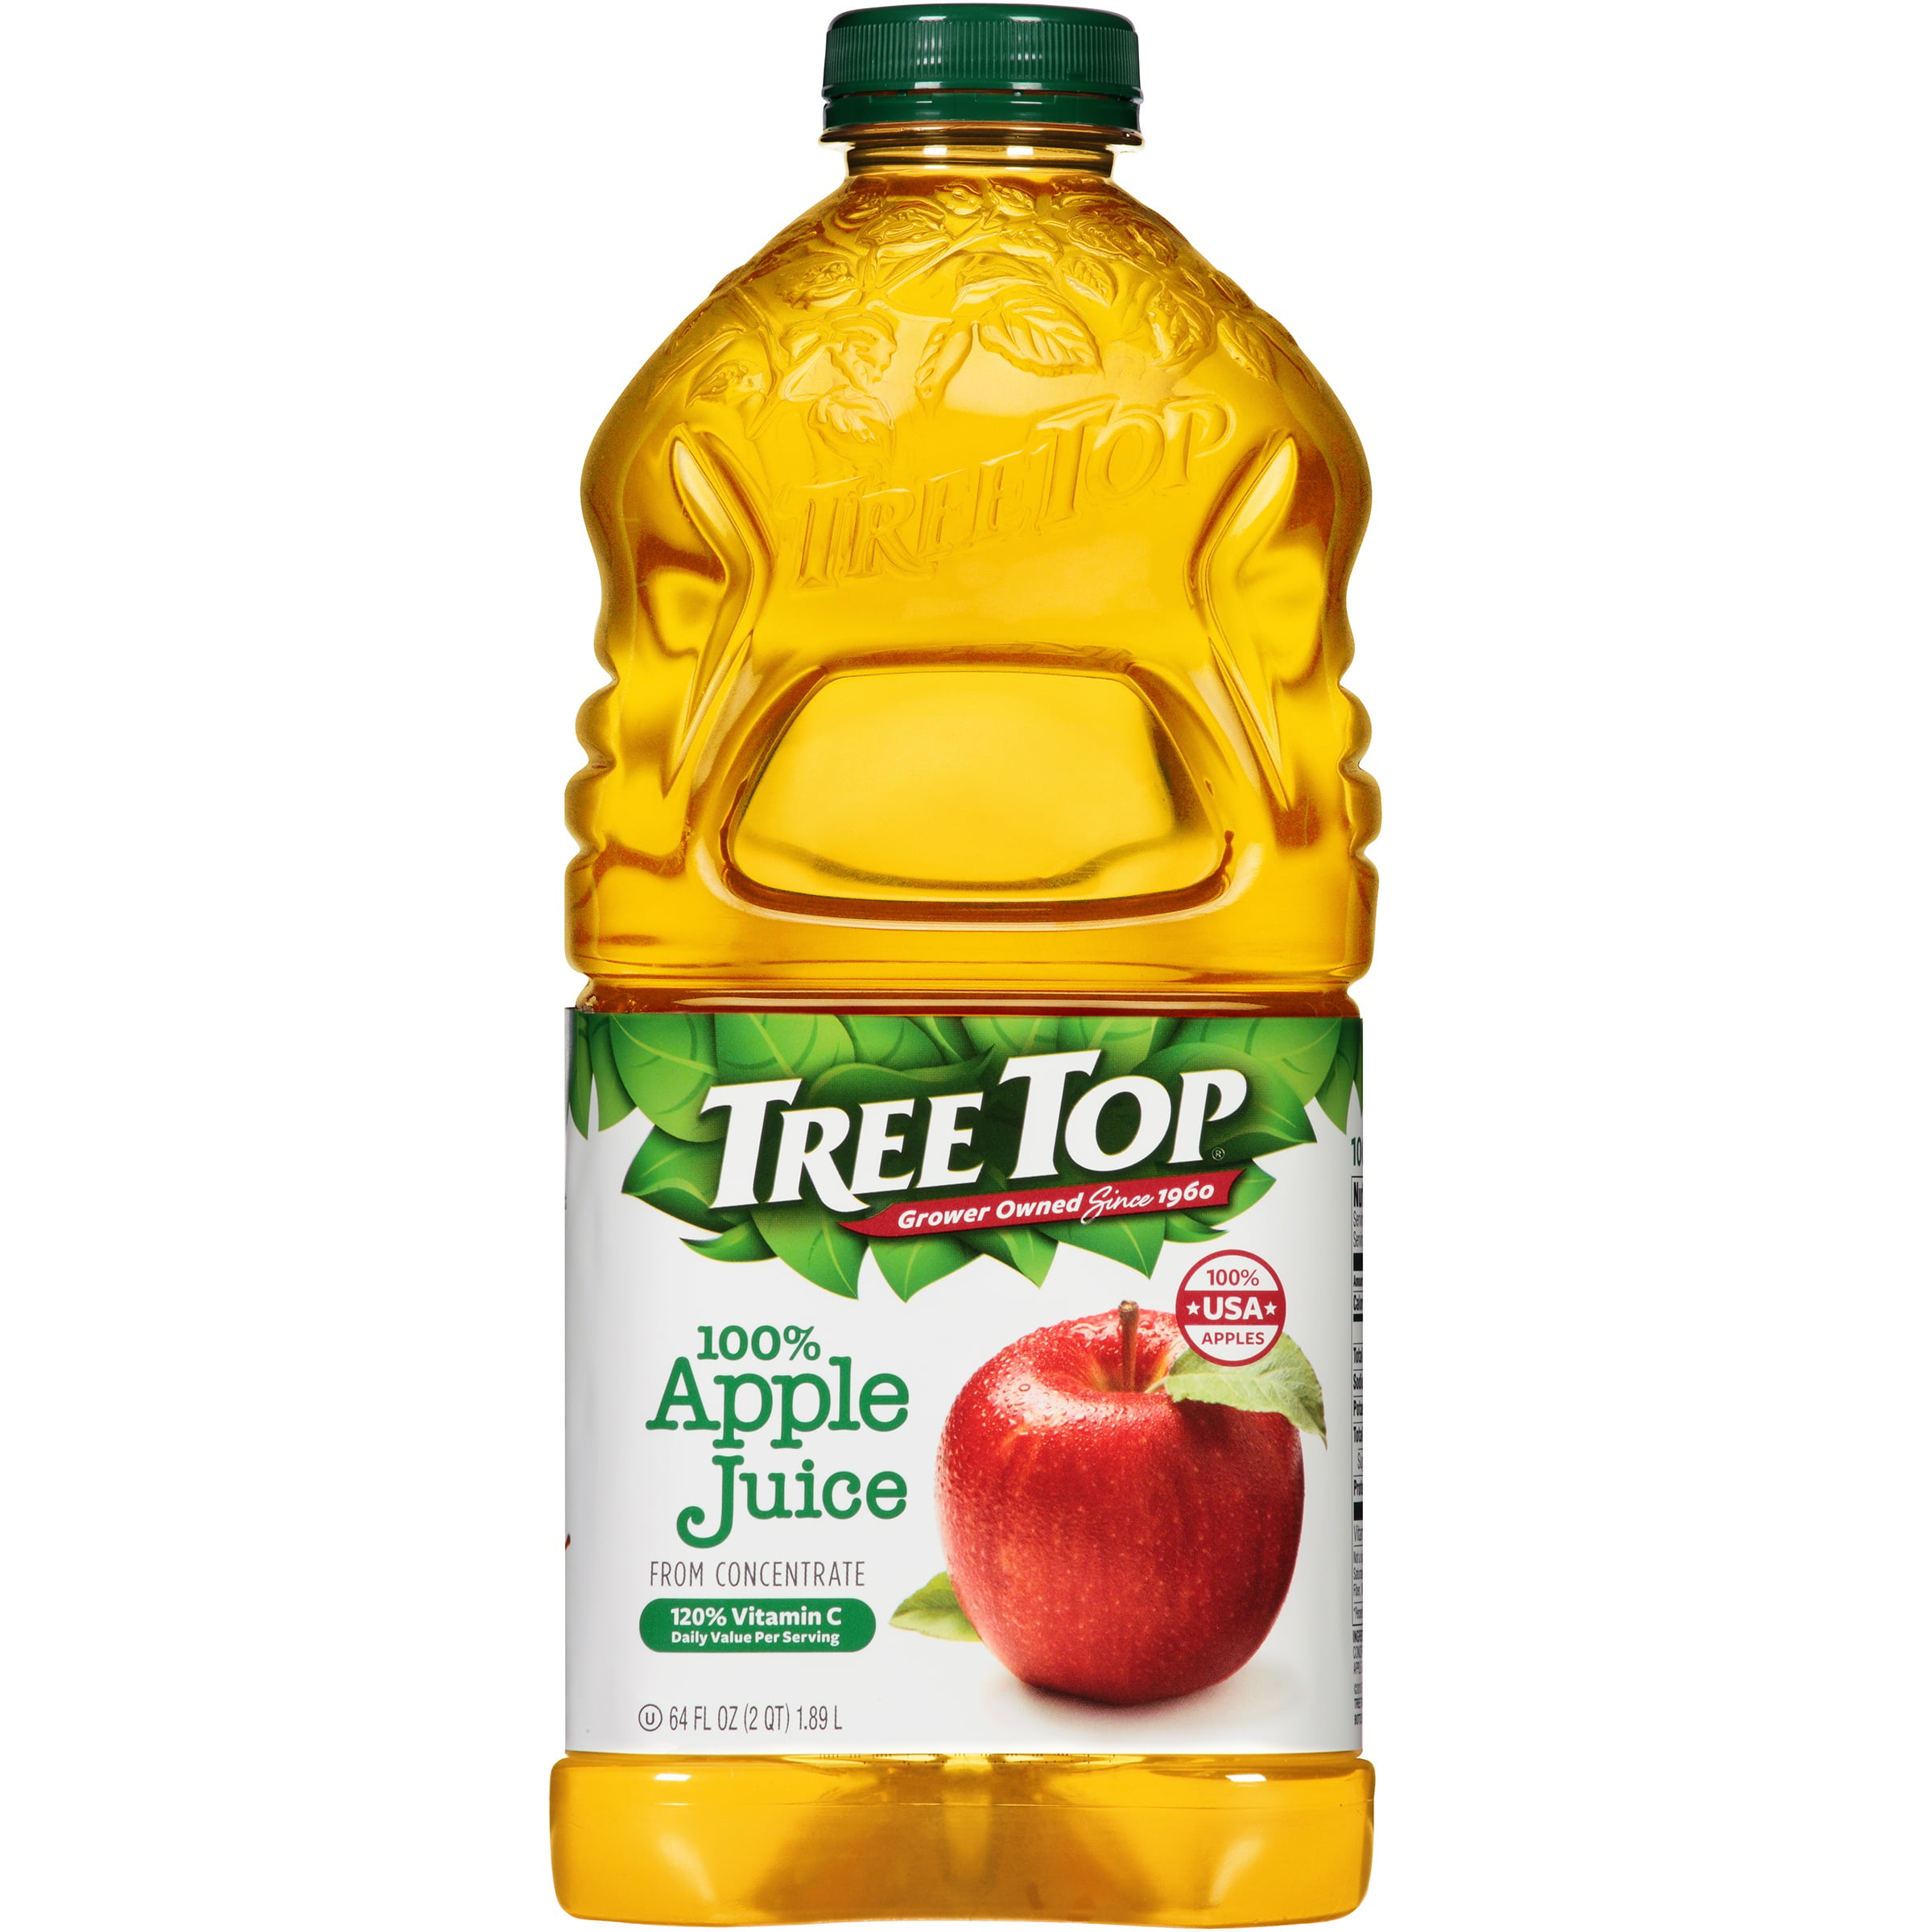 apple juice vs orange juice drank more